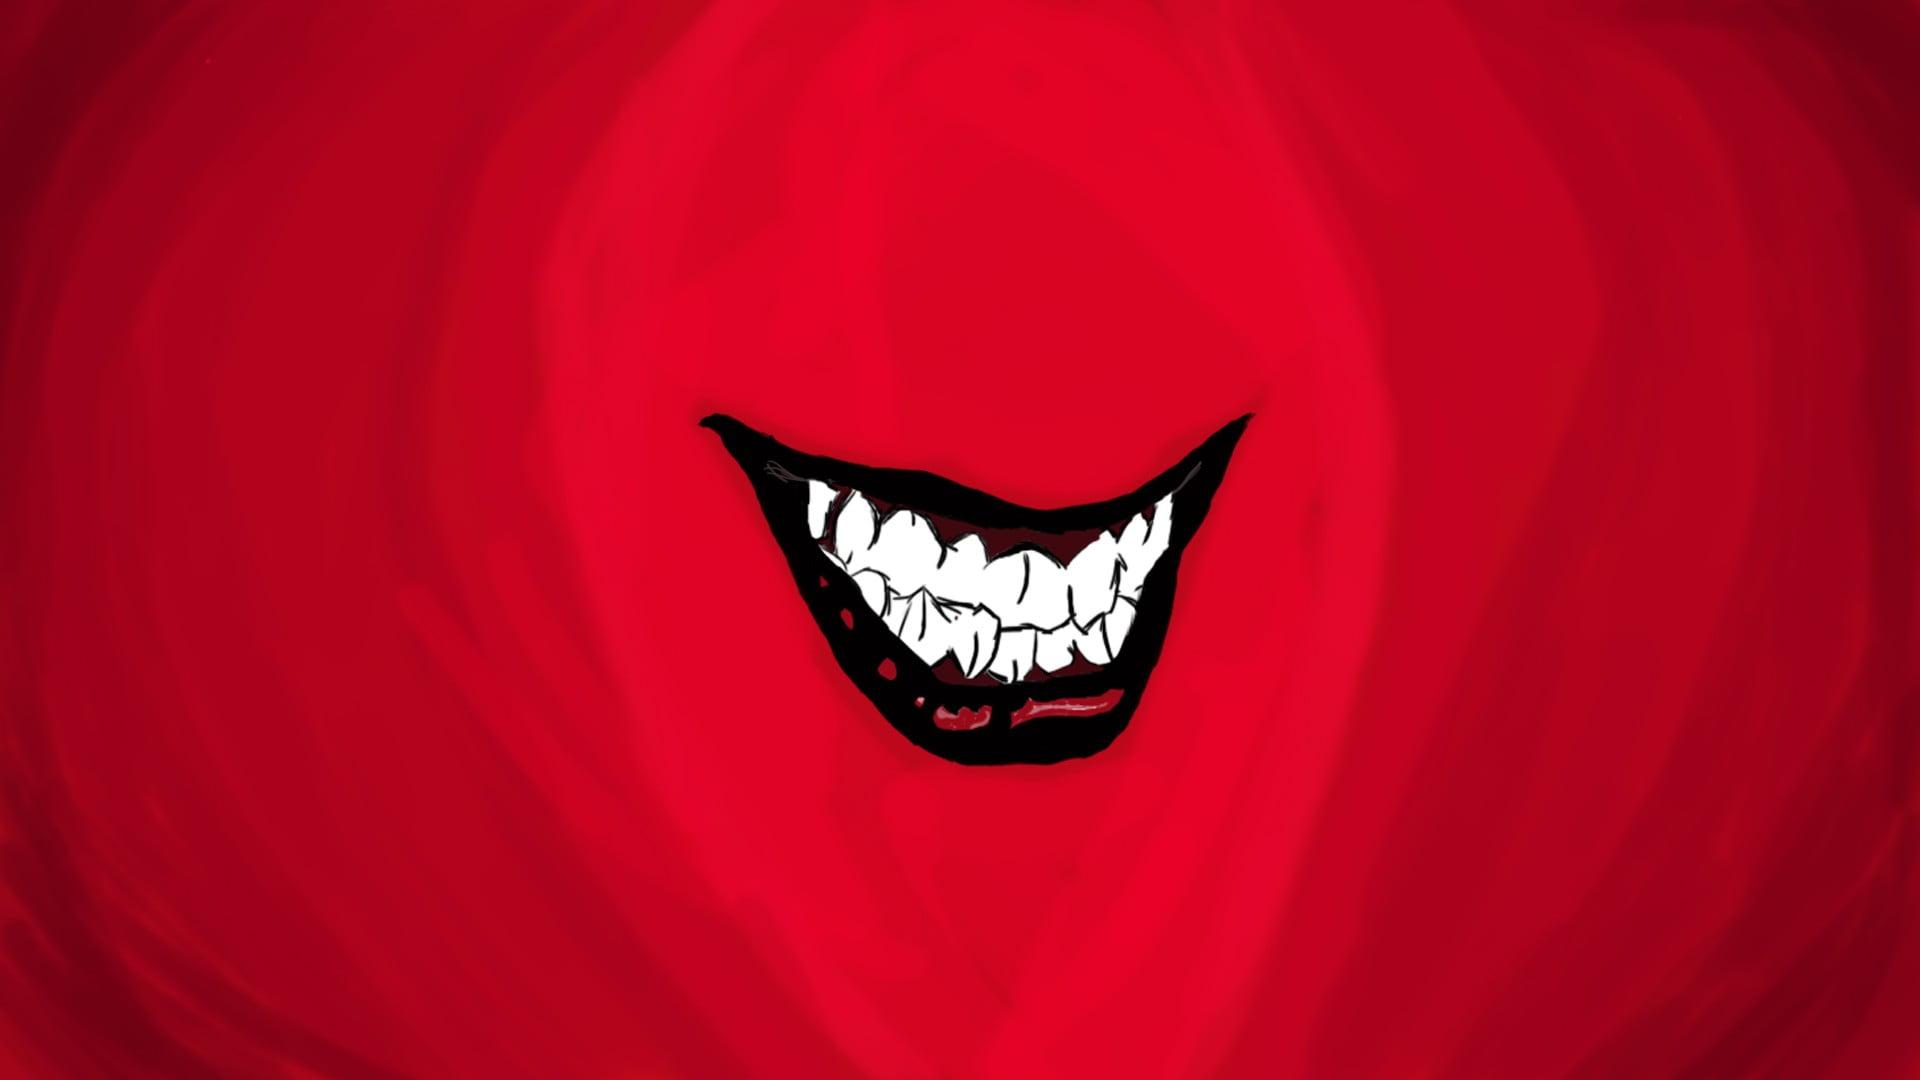 Joker Mouth Wallpapers Wallpaper Cave